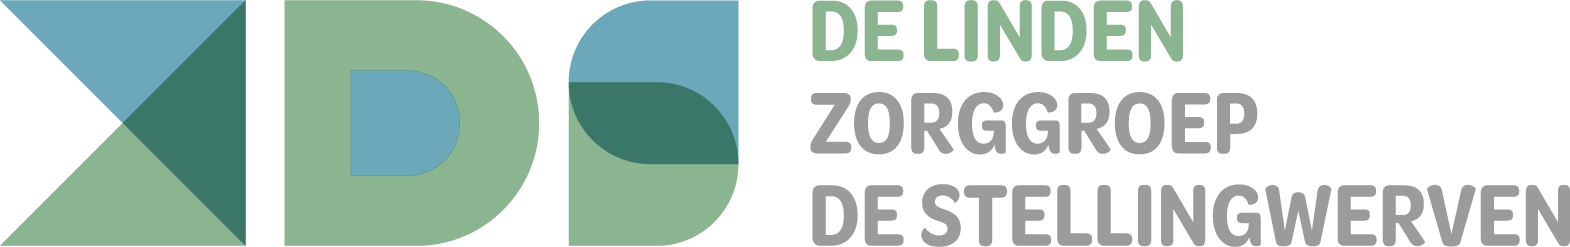 Logo De Linden Zorggroep de Stellingwerven